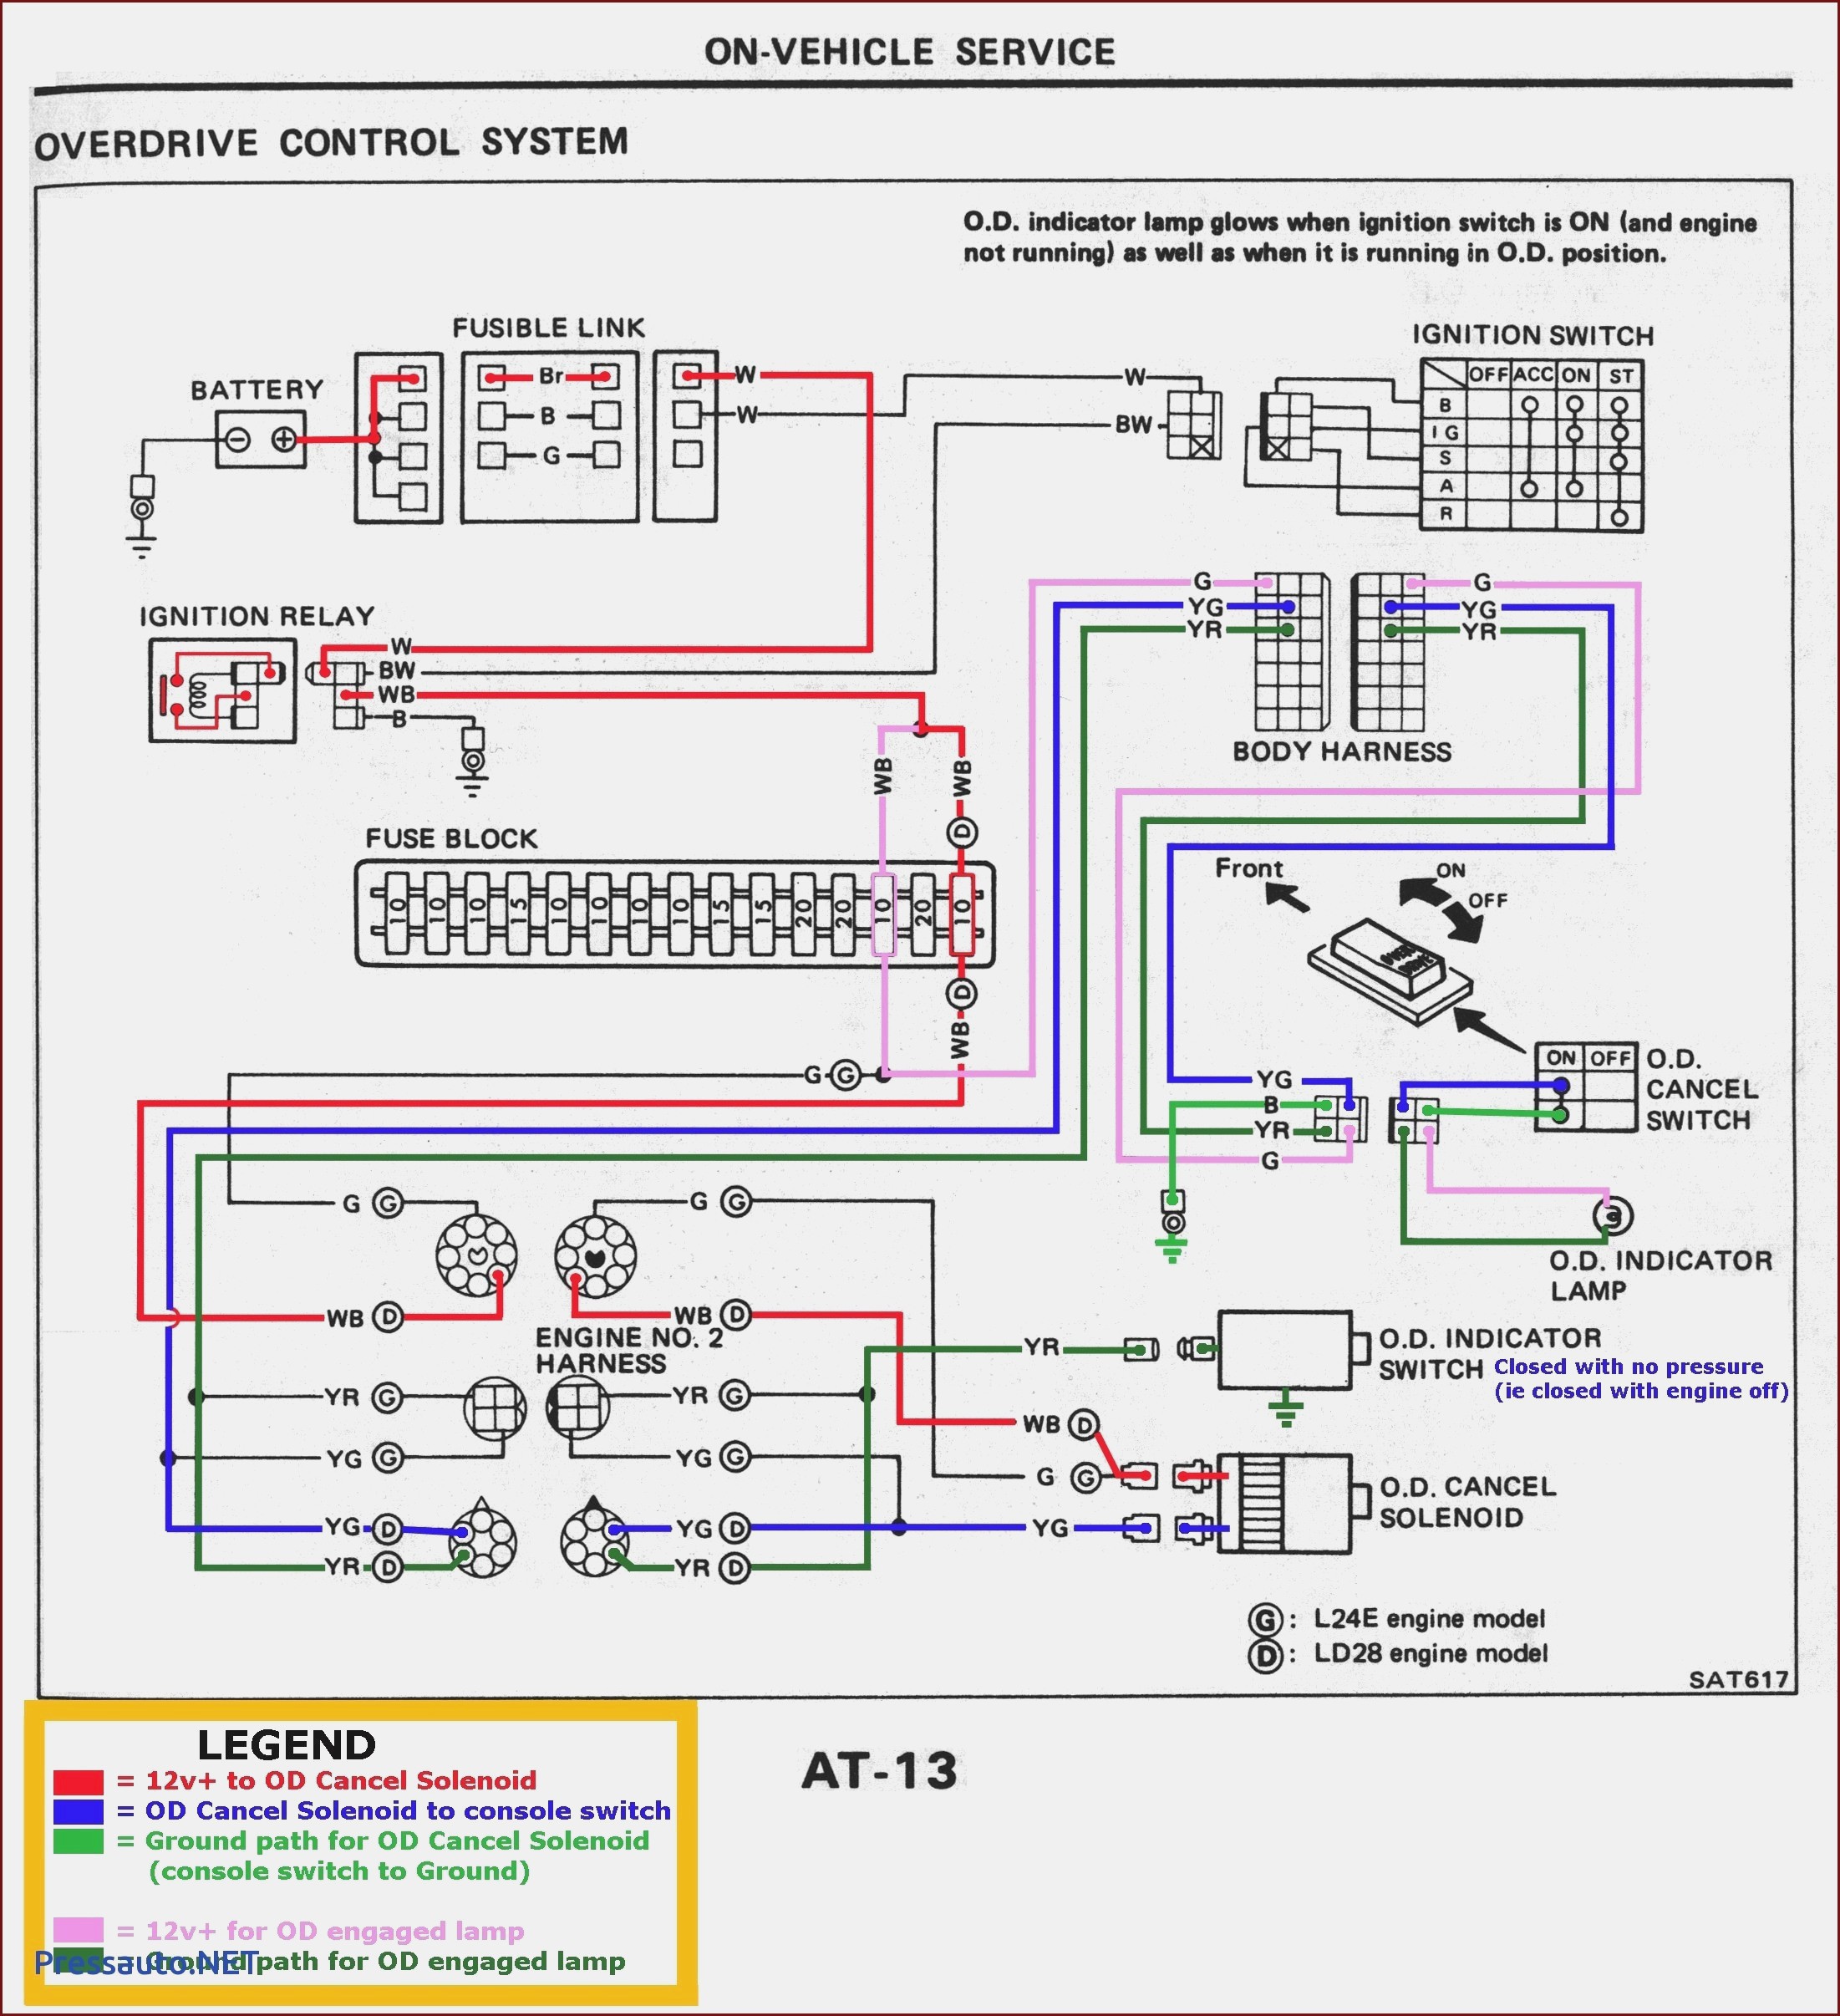 2008 Dodge Caliber Engine Diagram 1957 Chevrolet Wiring Diagram Rule Mate 750 Wiring Diagram Of 2008 Dodge Caliber Engine Diagram